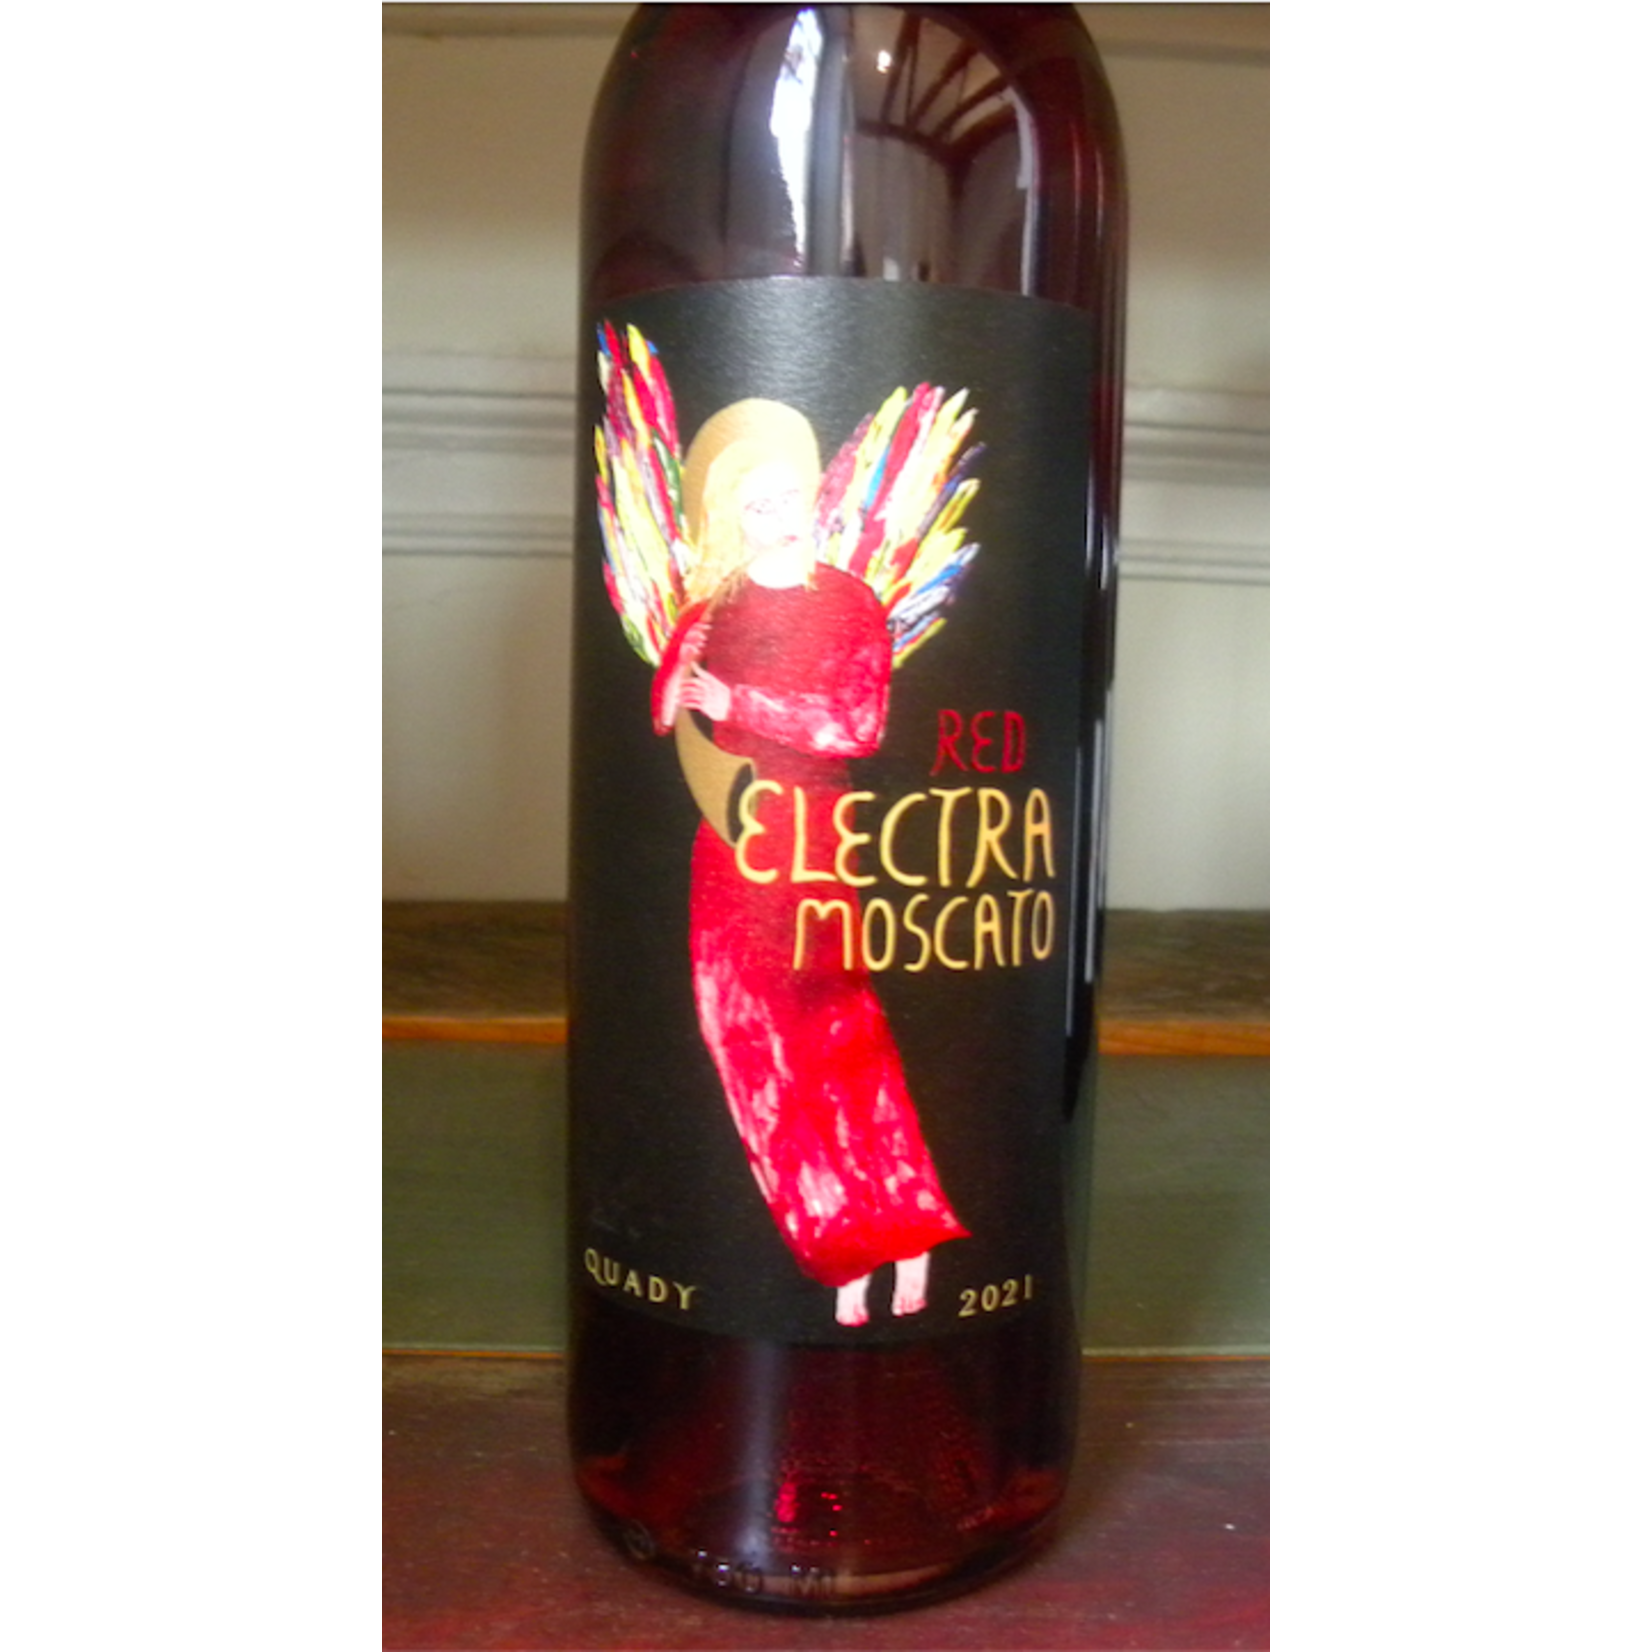 Quady Red "Electra" Moscato, California 2021